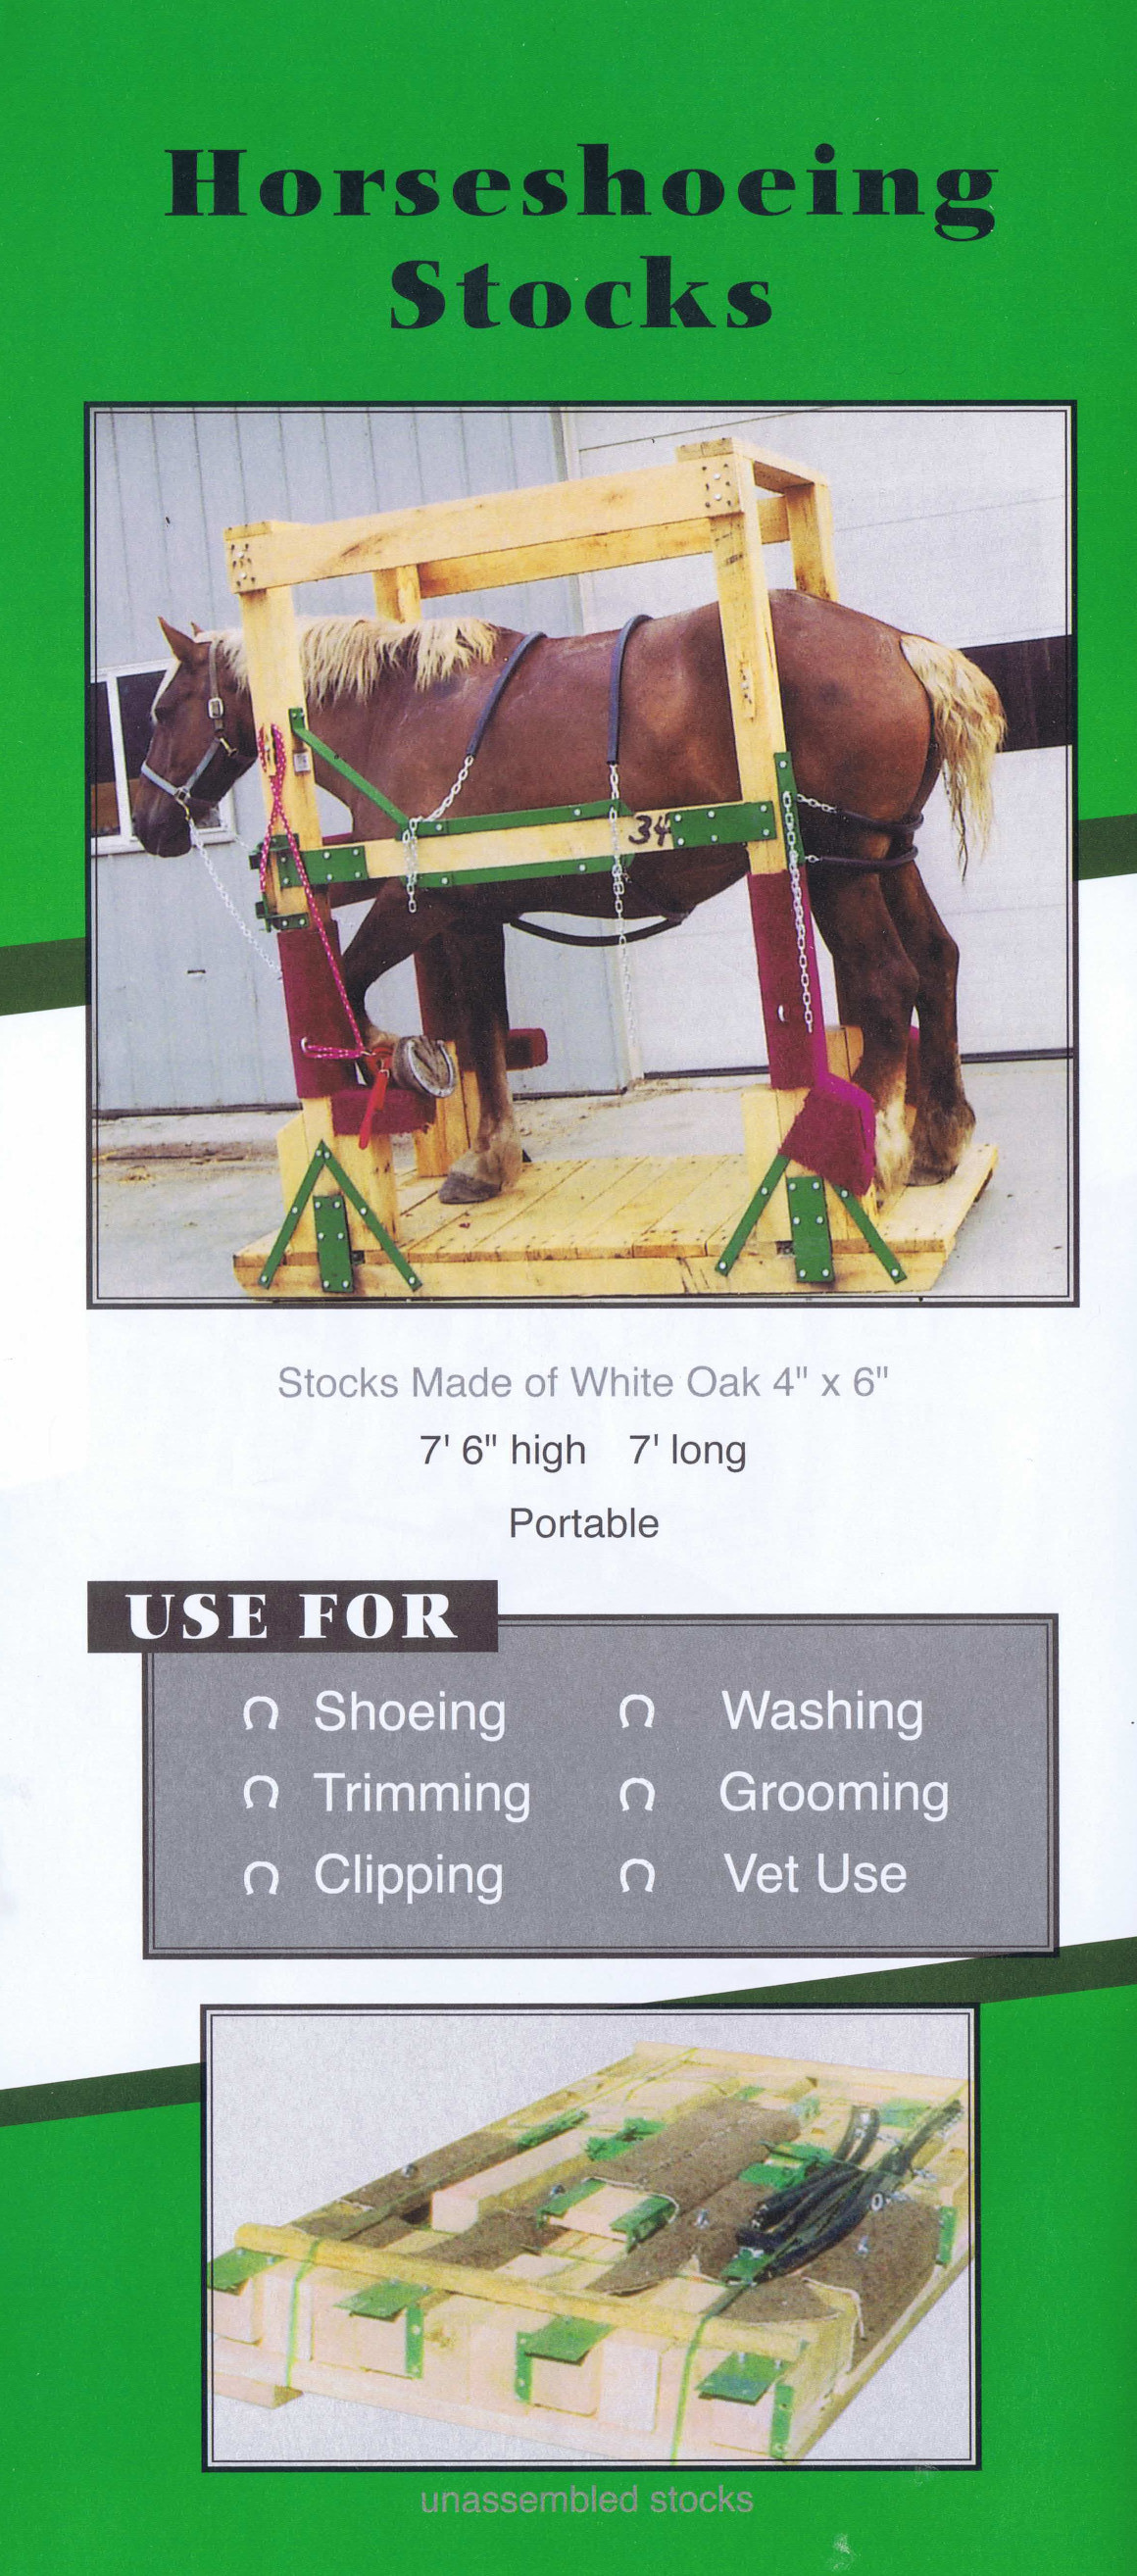 Horseshoeing stocks picture